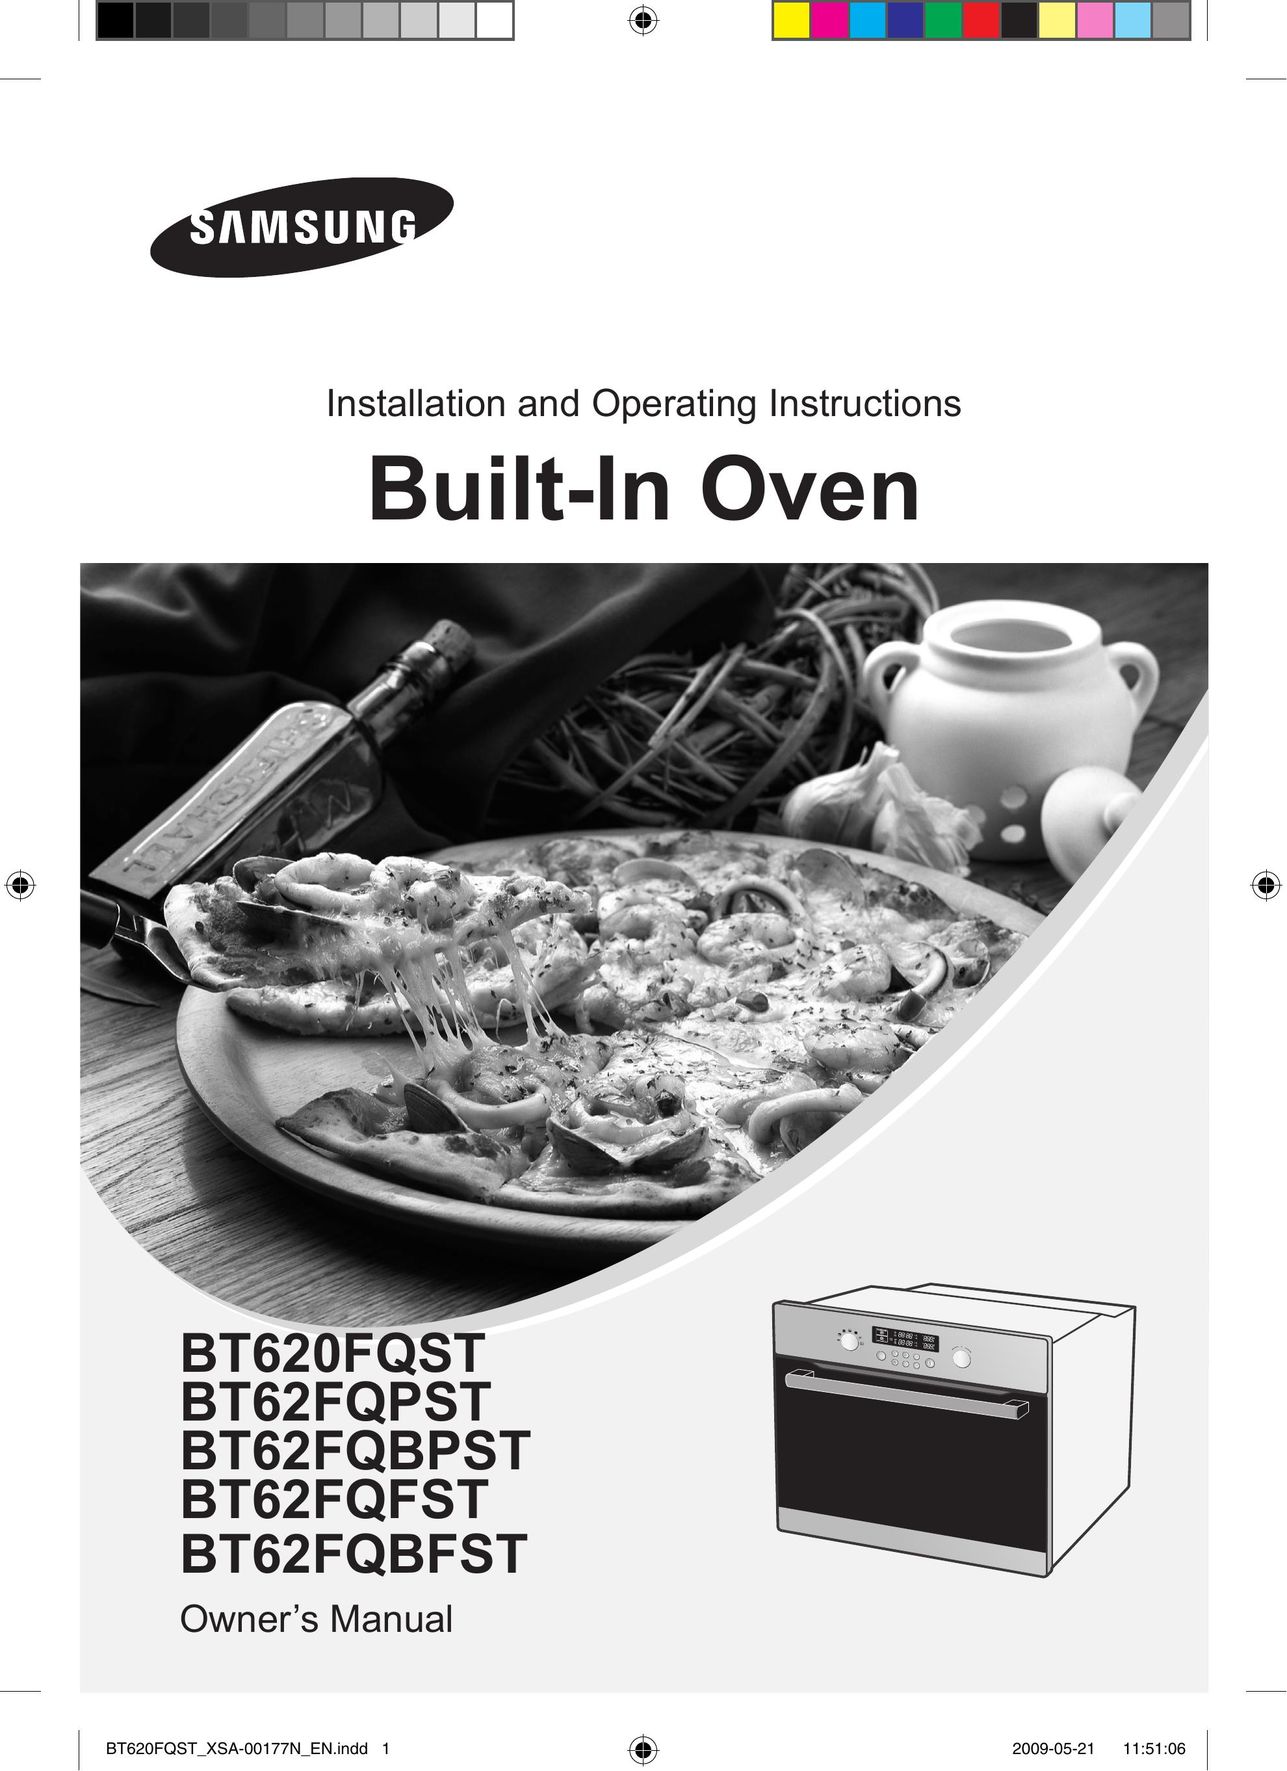 Samsung BT62FQPST Oven User Manual